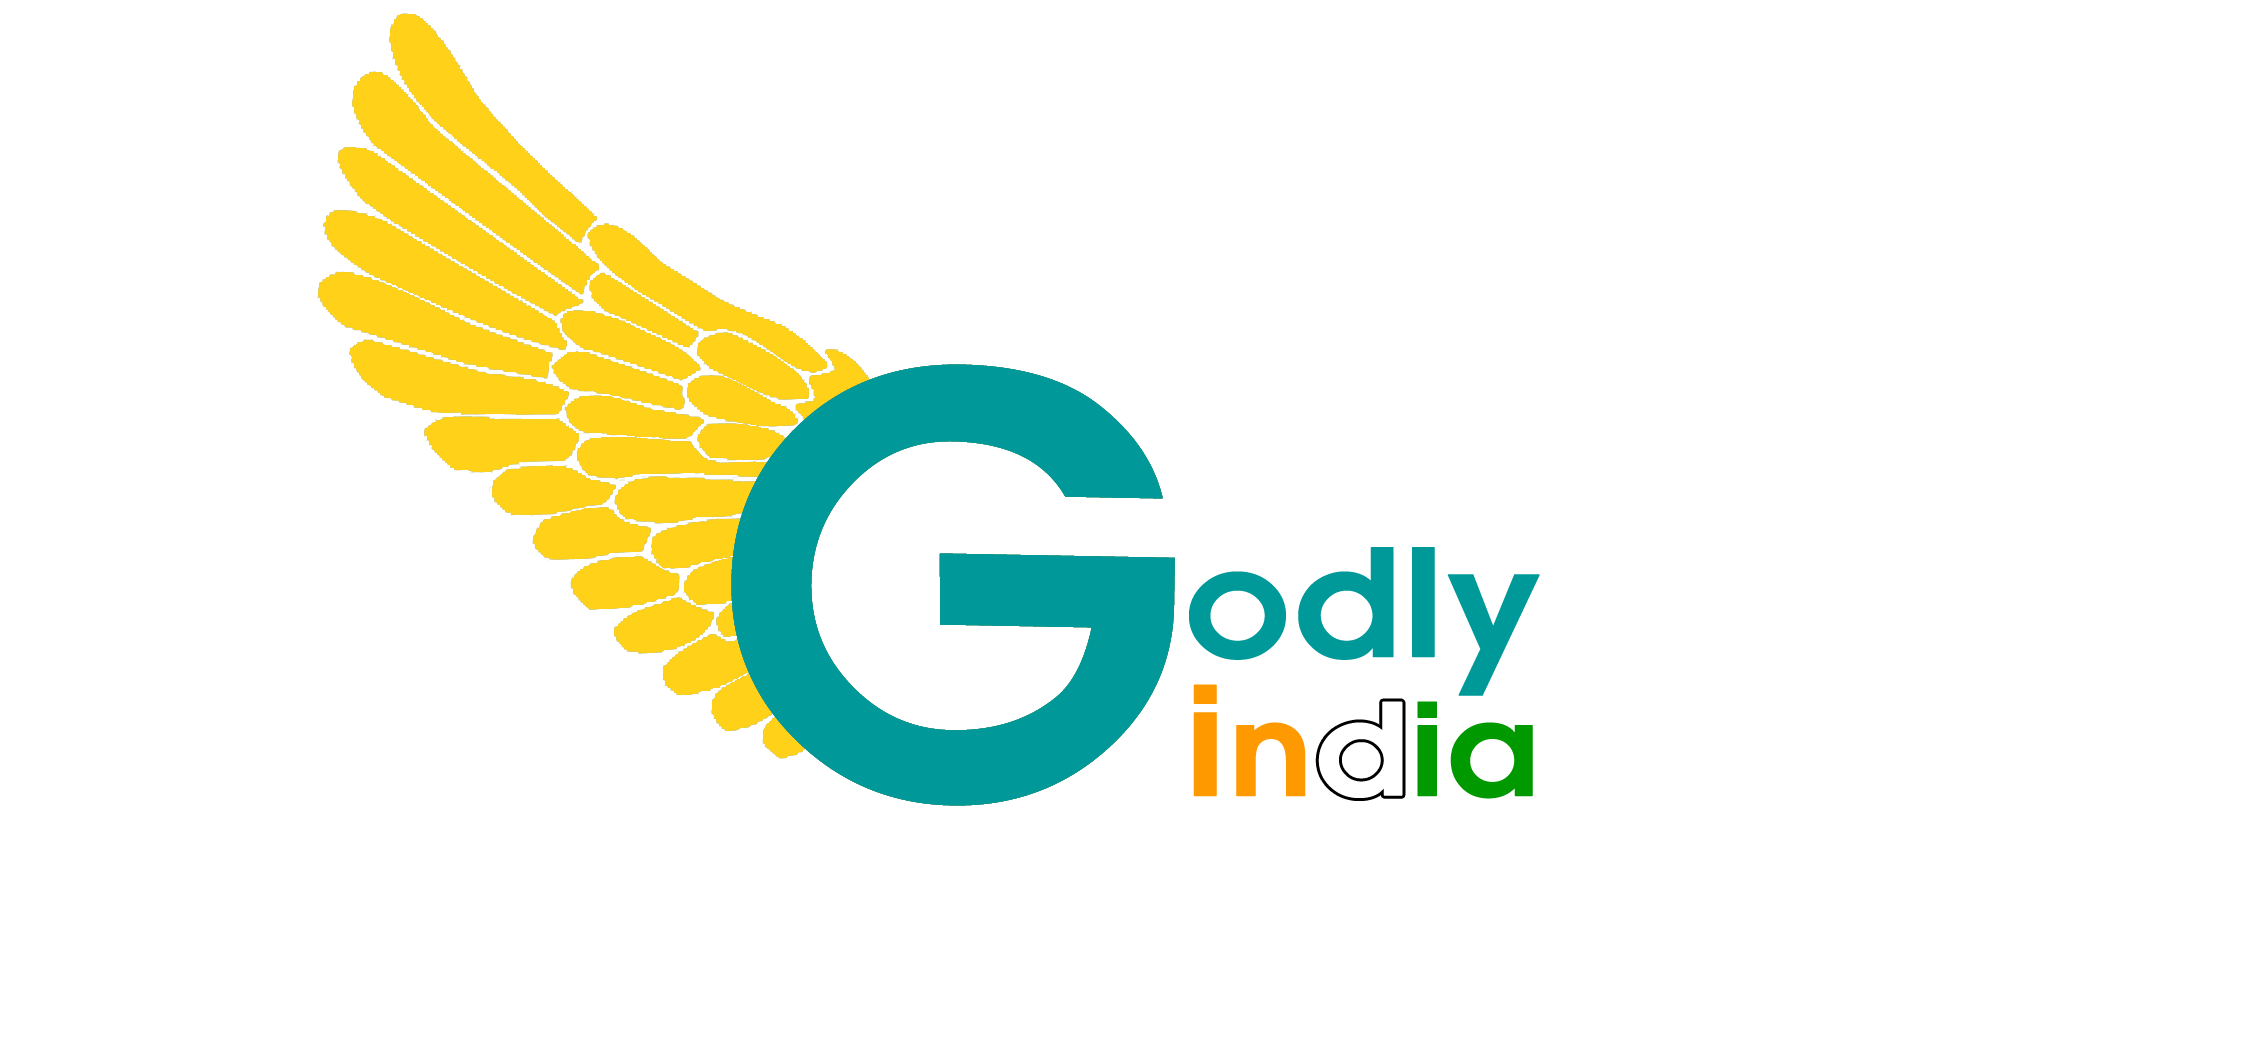 Godly Logo - Godly India